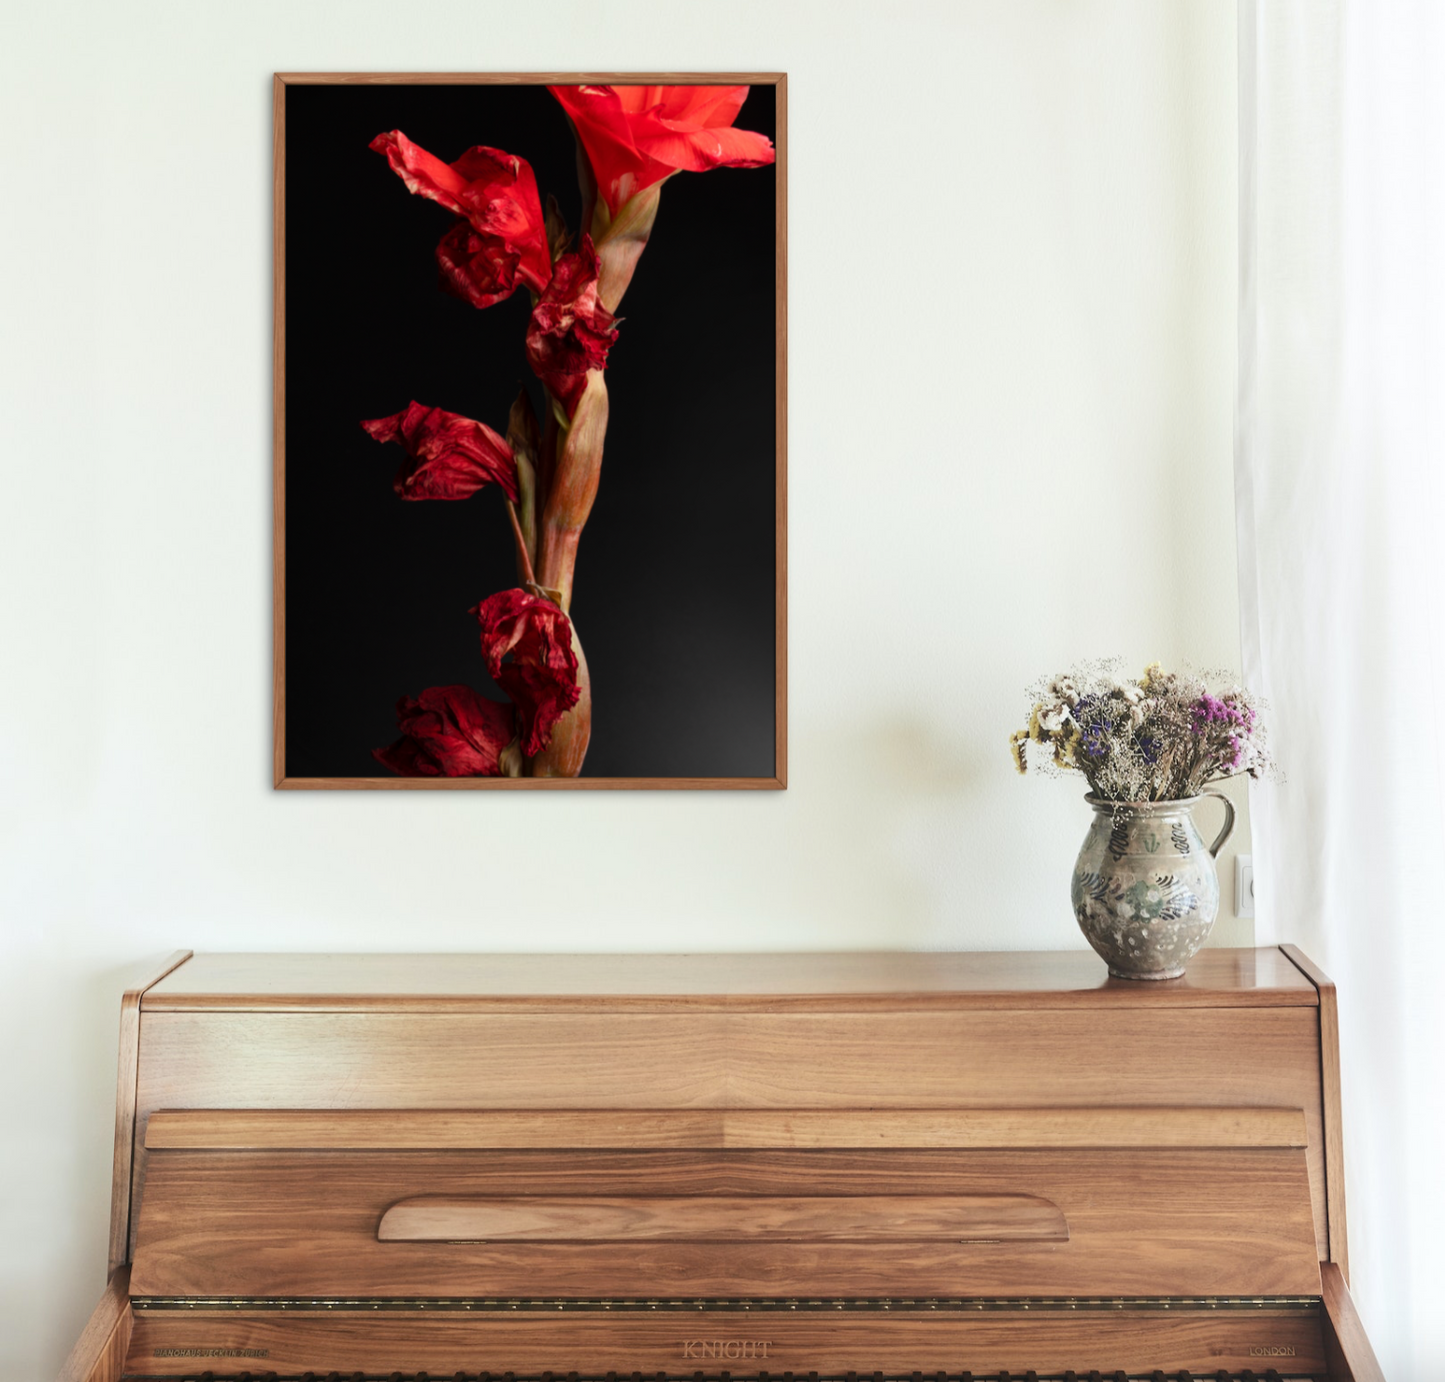 Bleeding Heart -  Still Life Photography Floral Fine Art - Wall Art Metal or Acrylic Print